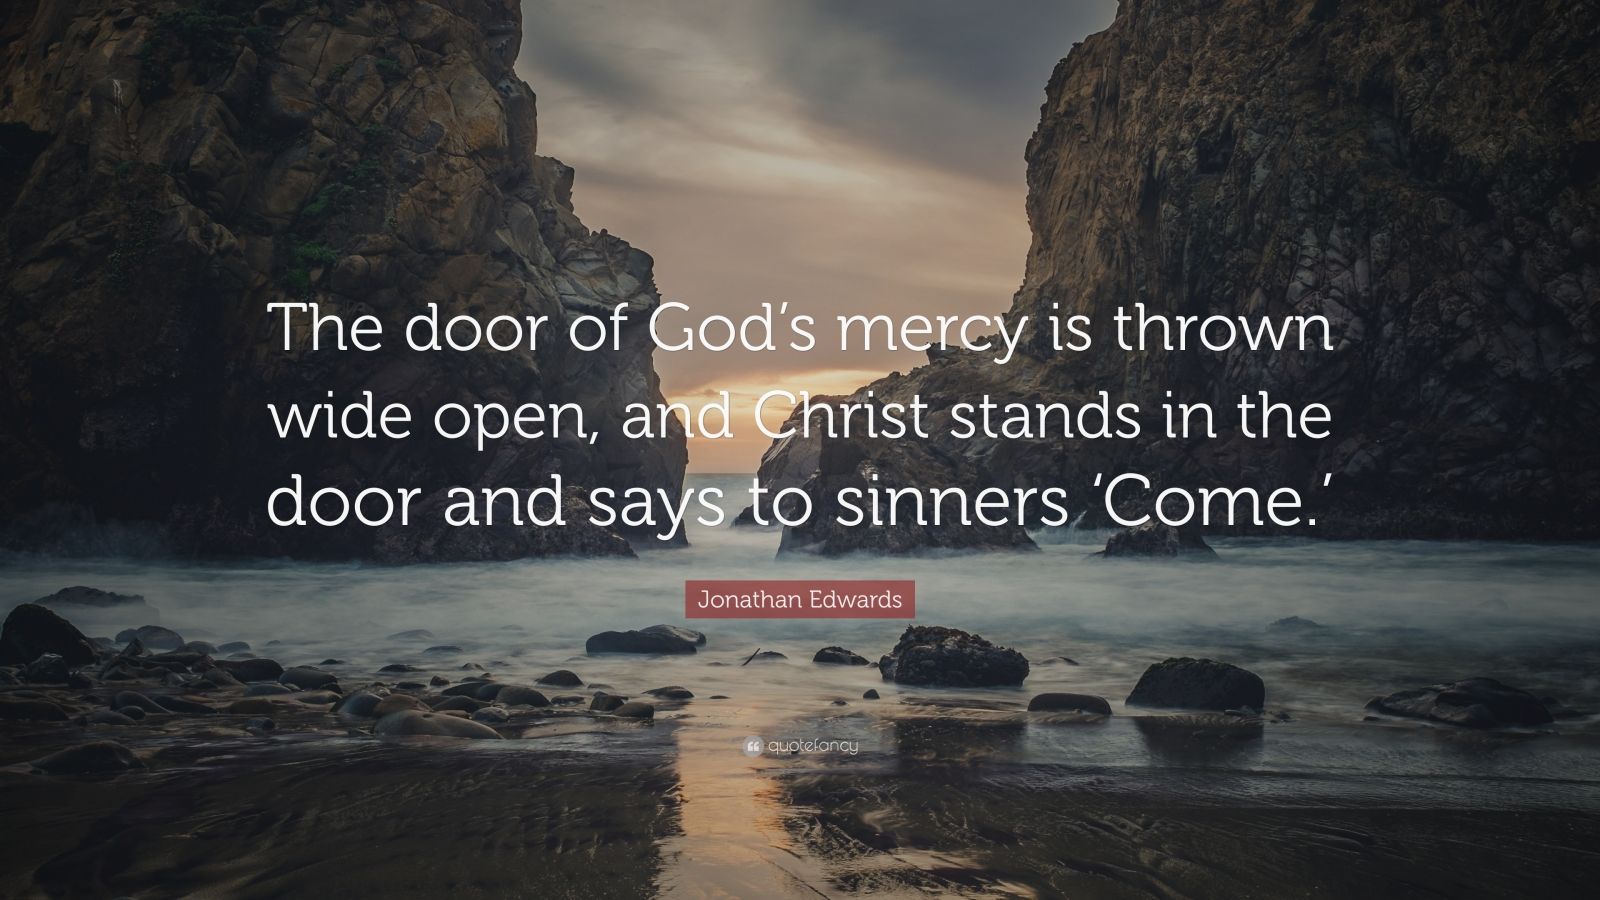 Jonathan Edwards Quote: “The door of God’s mercy is thrown wide open ...